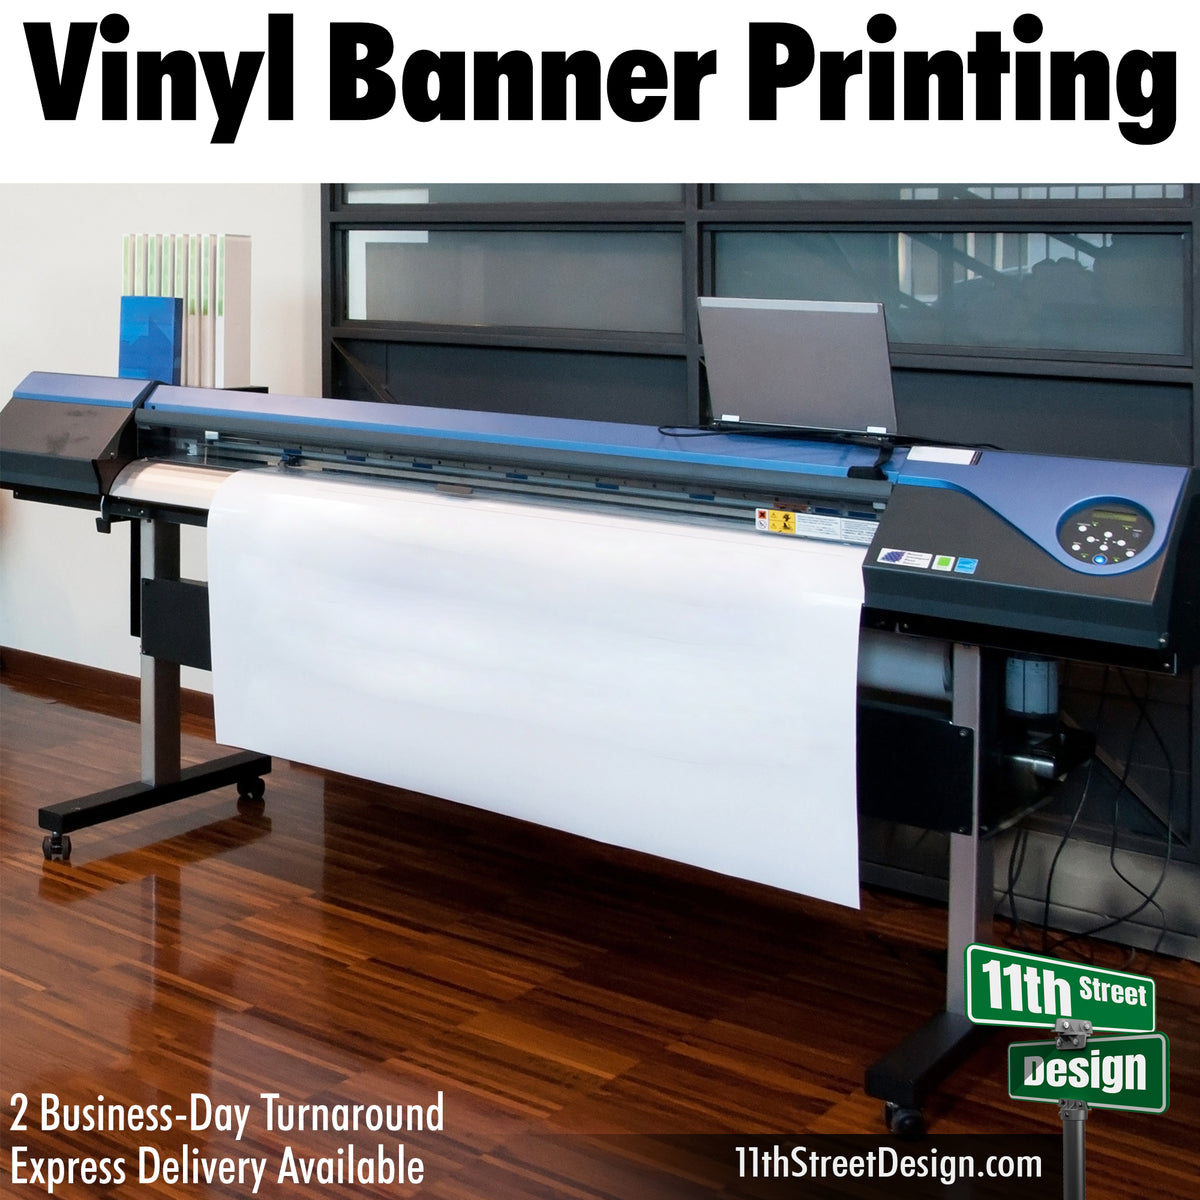 Vinyl Banner Printing